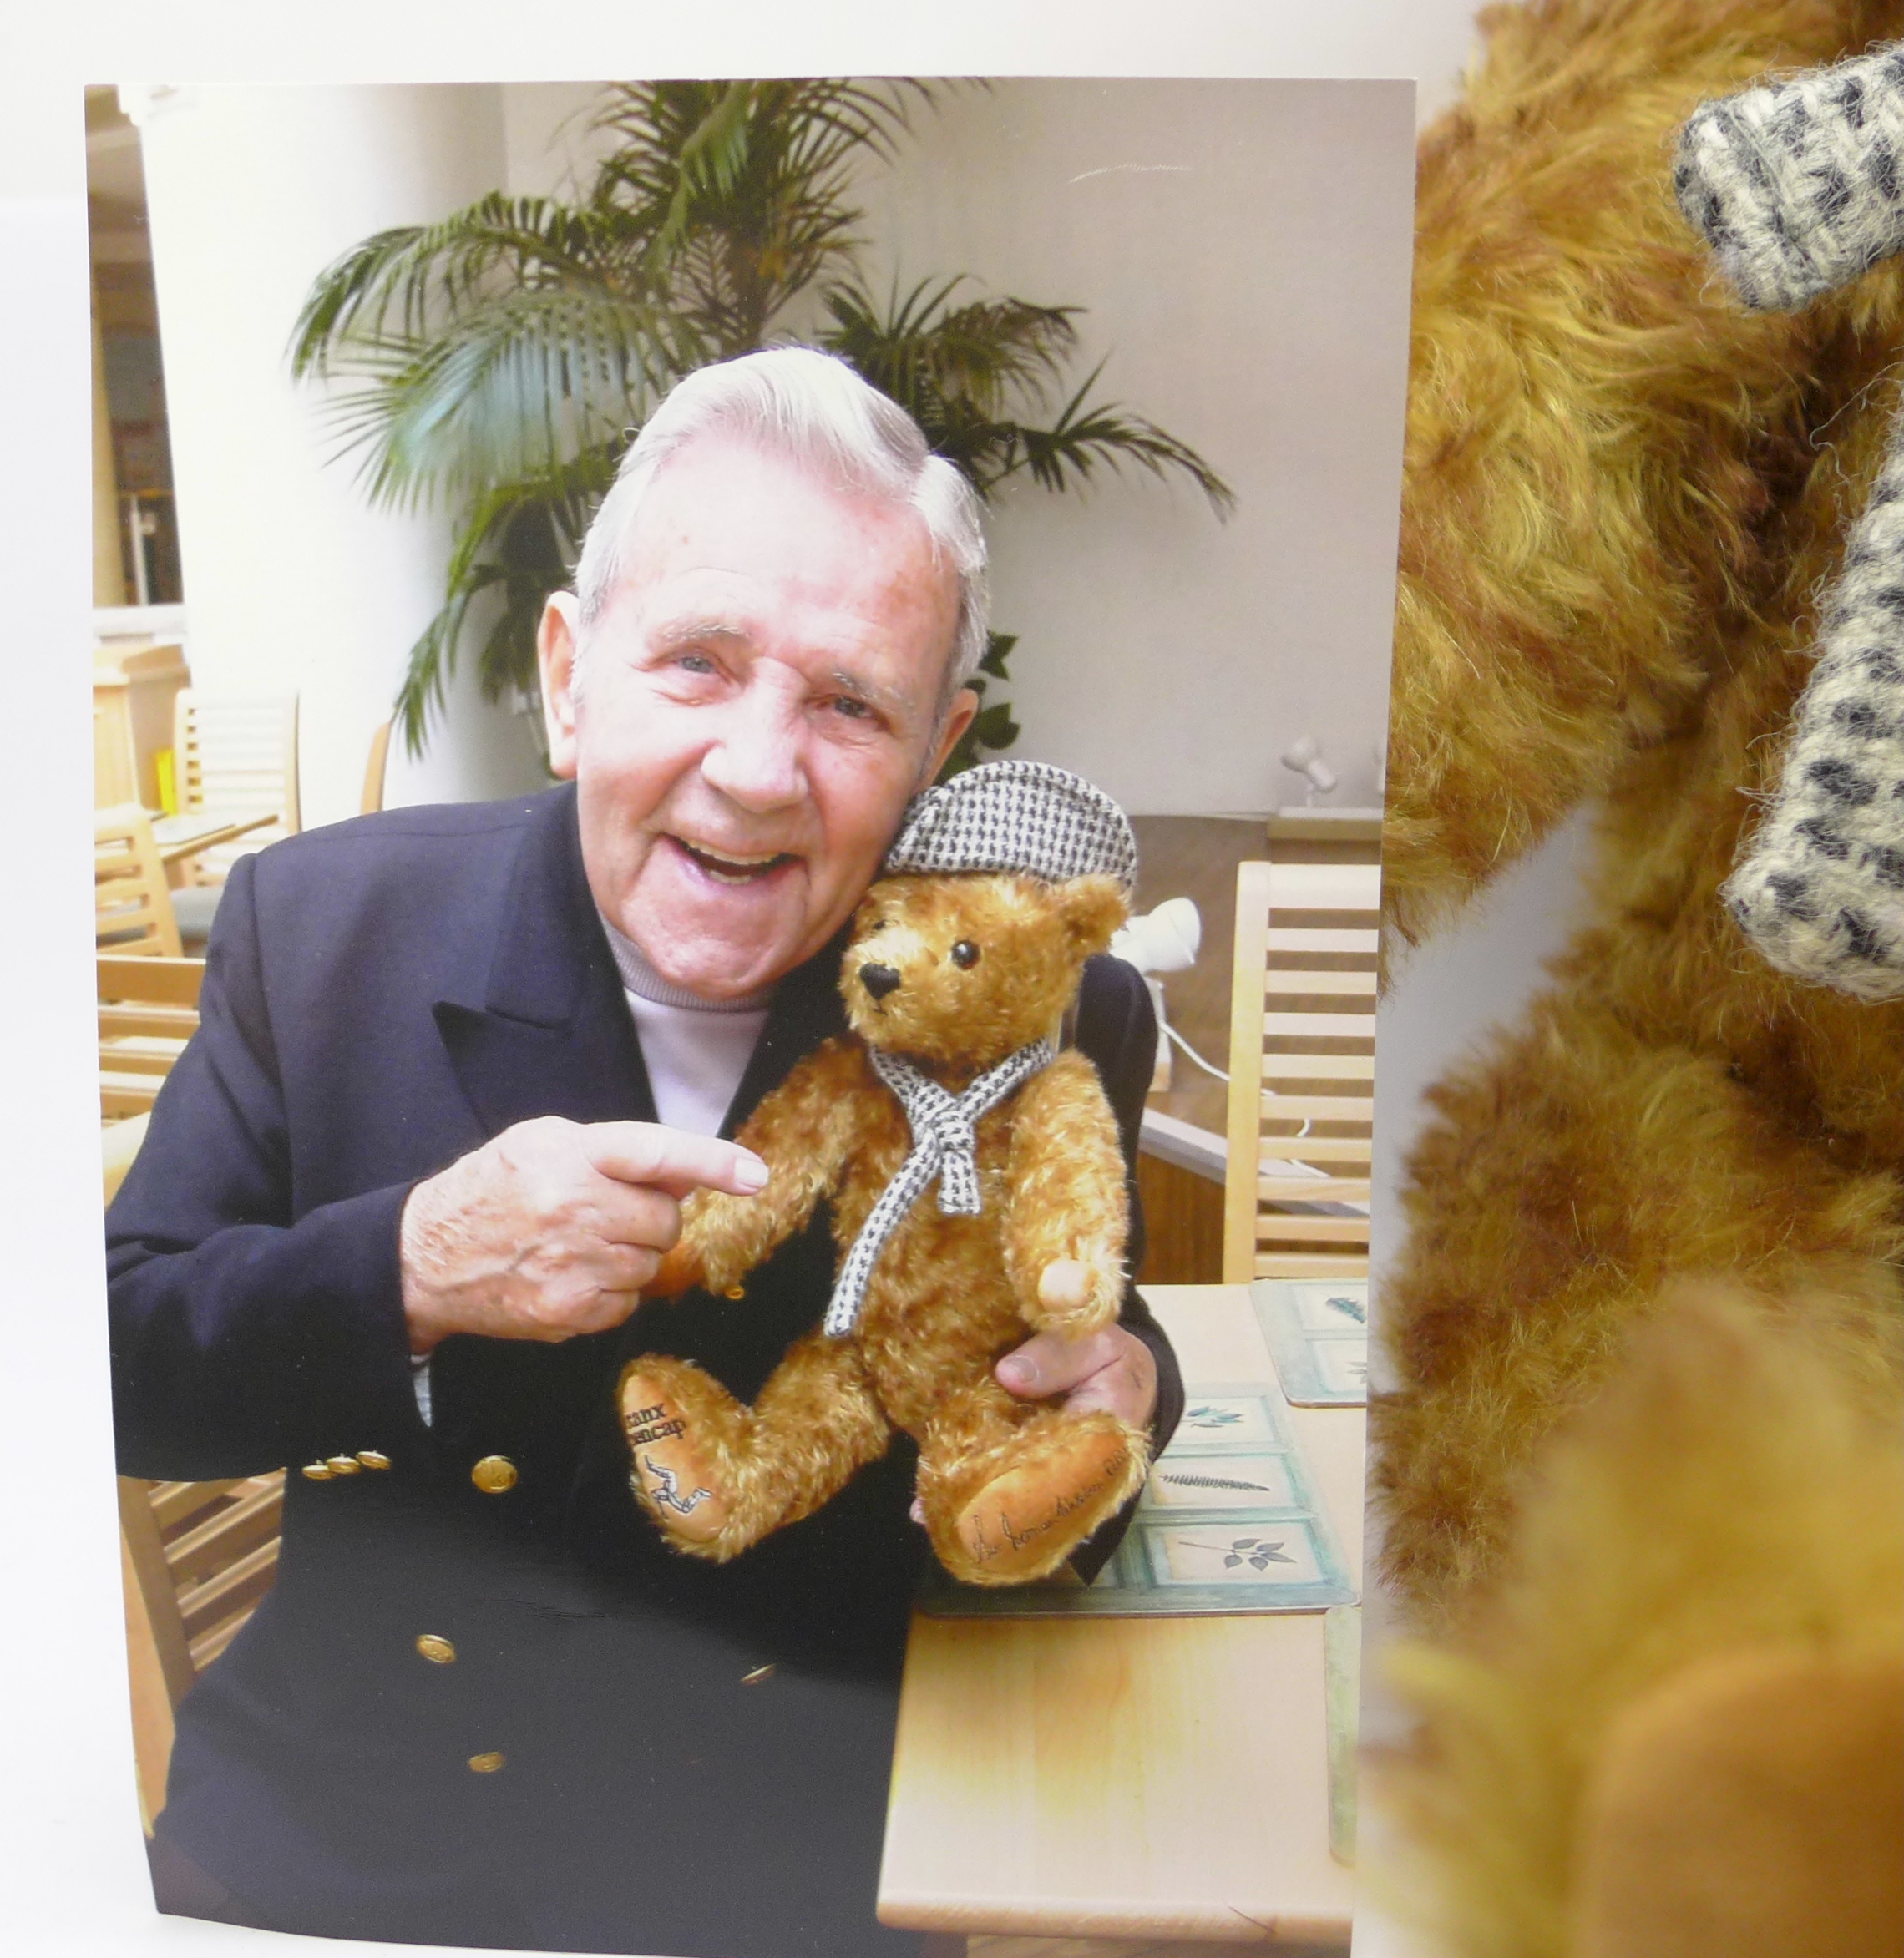 A Merrythought Teddy bear for Manx Mencap, Sir Norman Wisdom O.B.E. with photograph - Image 2 of 6